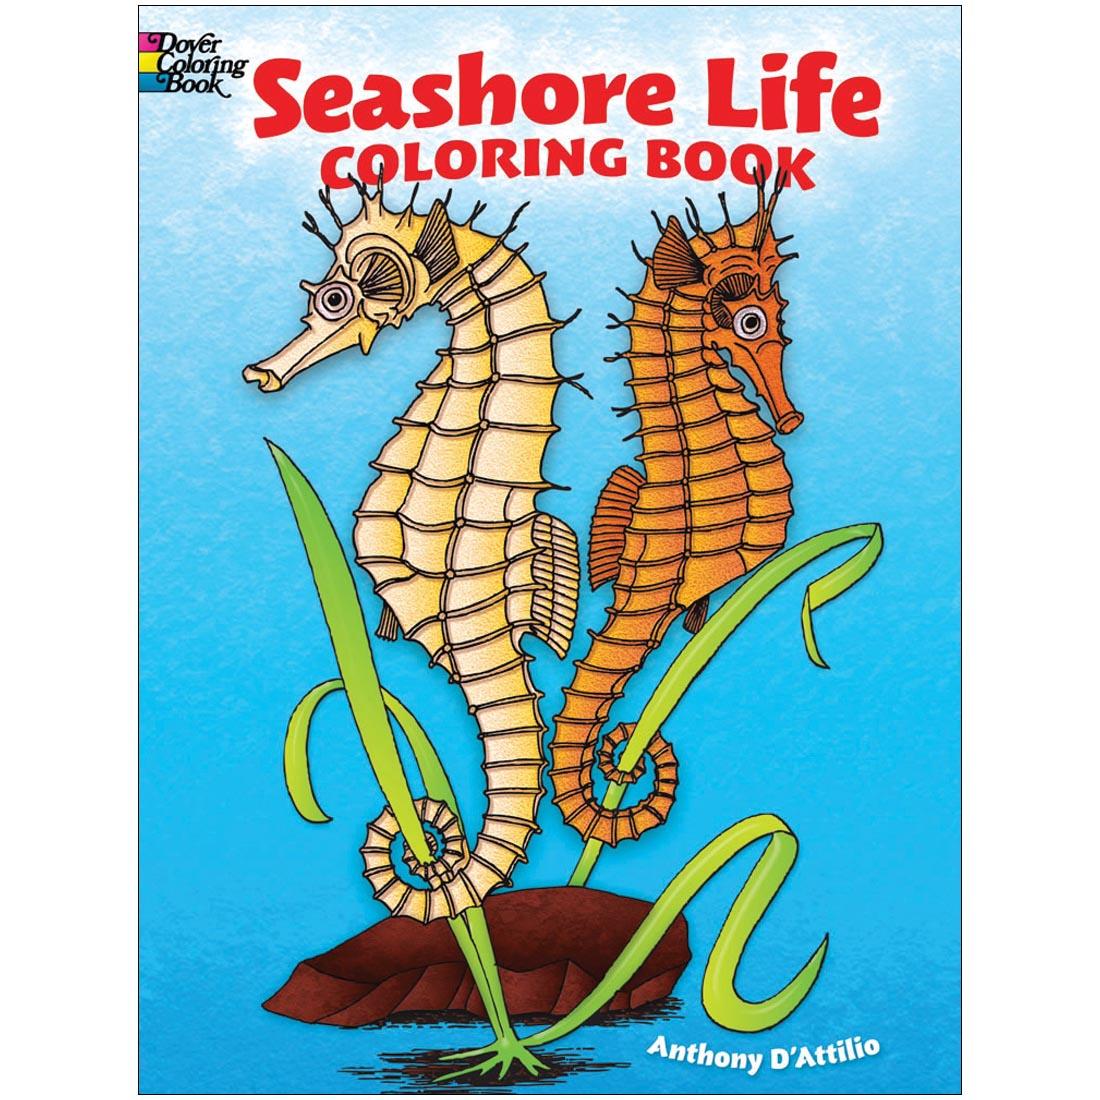 Seashore Life Coloring Book by Dover